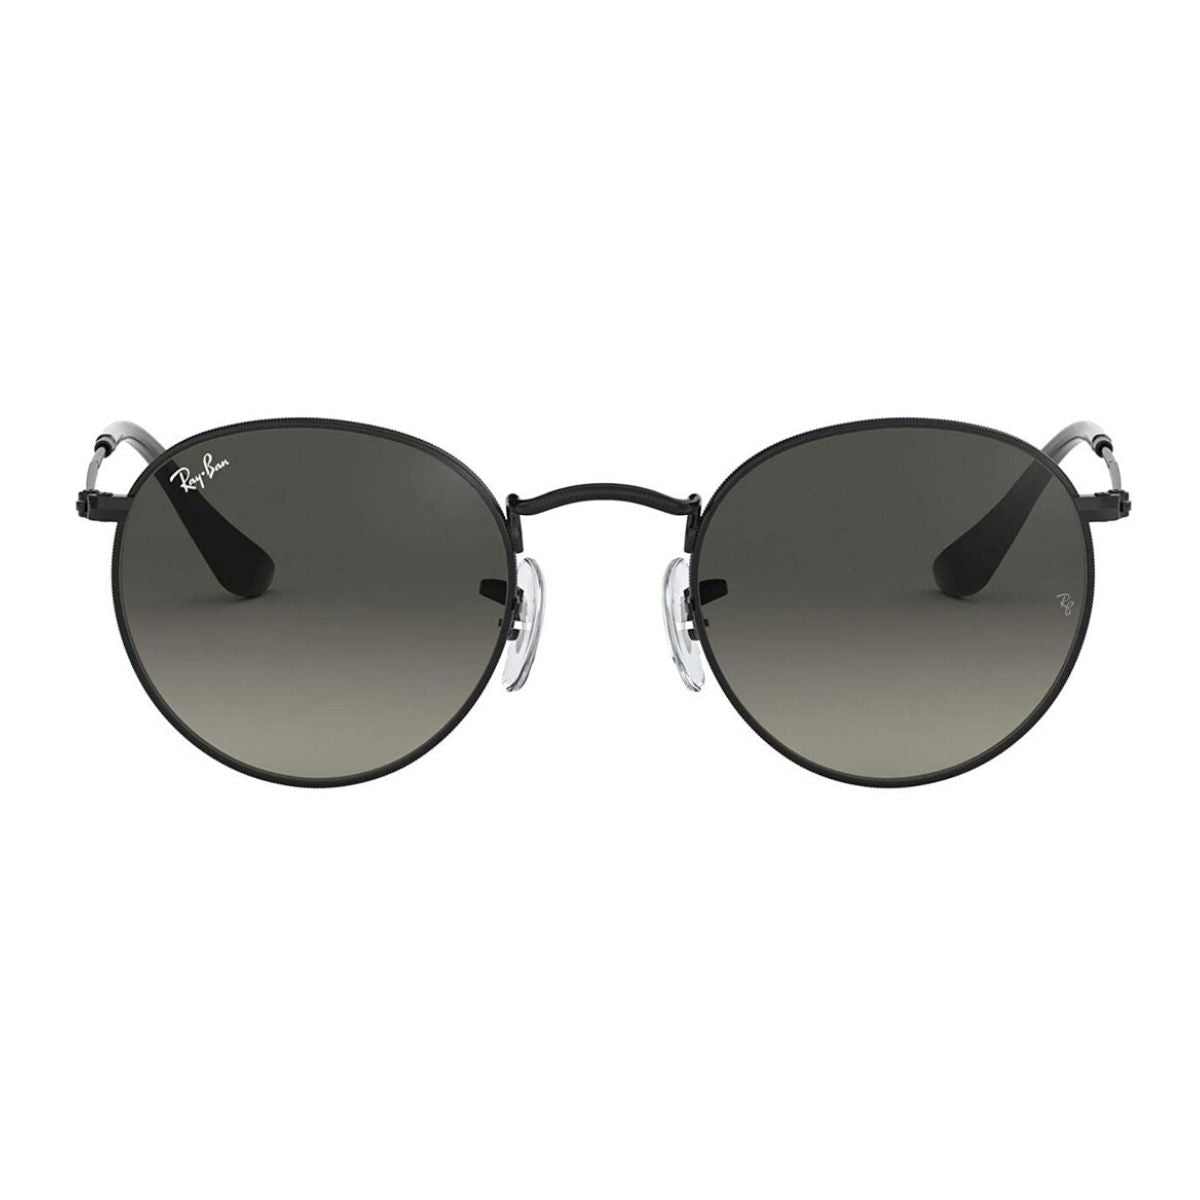 "Buy Rayban 3447 002/71 Sunglasses for Unisex Online At Optorium"